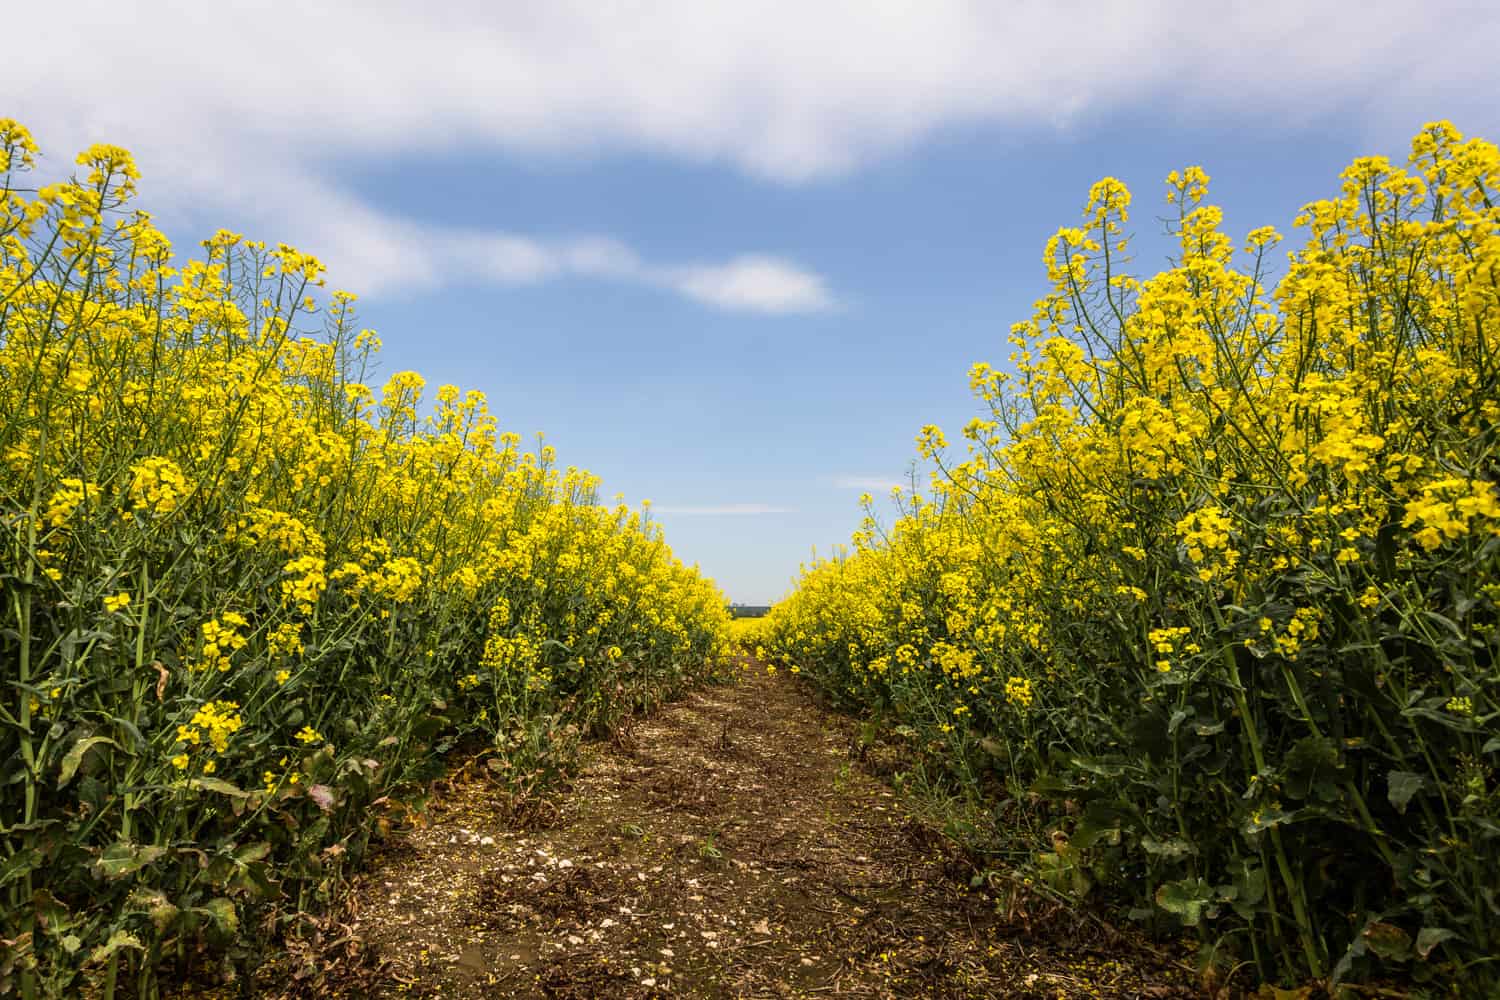  Yellow Field - original edit - Hampshire Photography by Rick McEvoy 